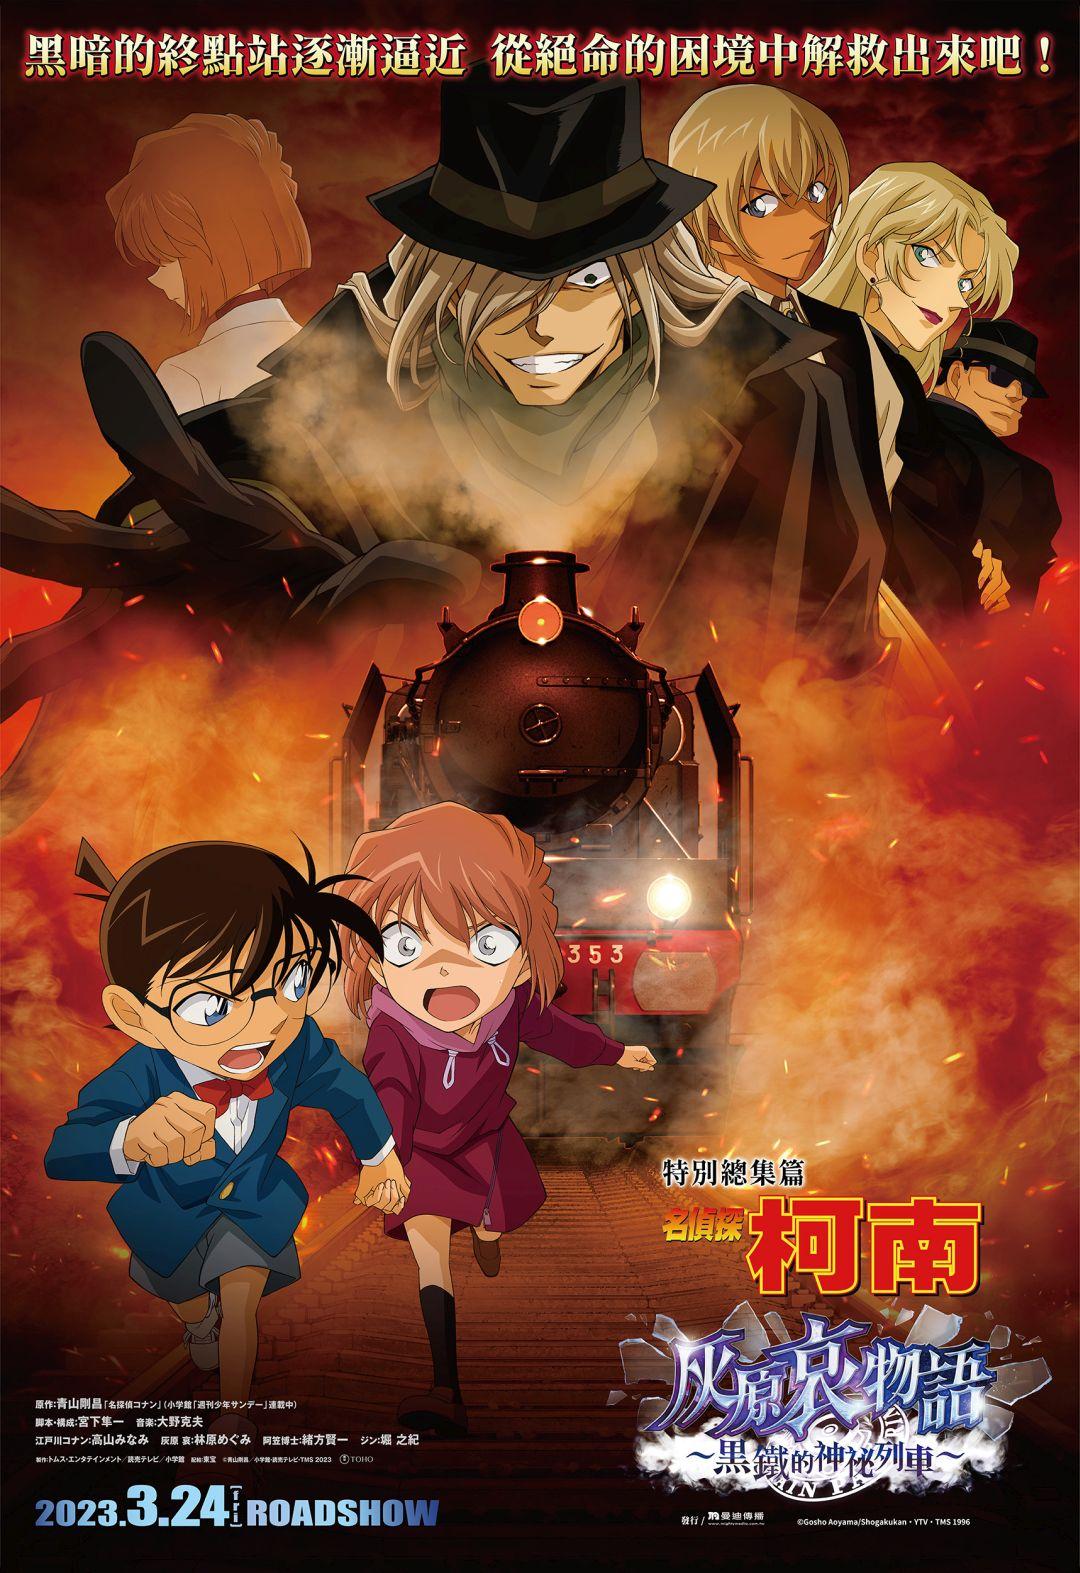 名偵探柯南 灰原哀物語〜黑鐵的神祕列車〜Detective Conan: The Story of Ai Haibara: Black Iron Mystery Train